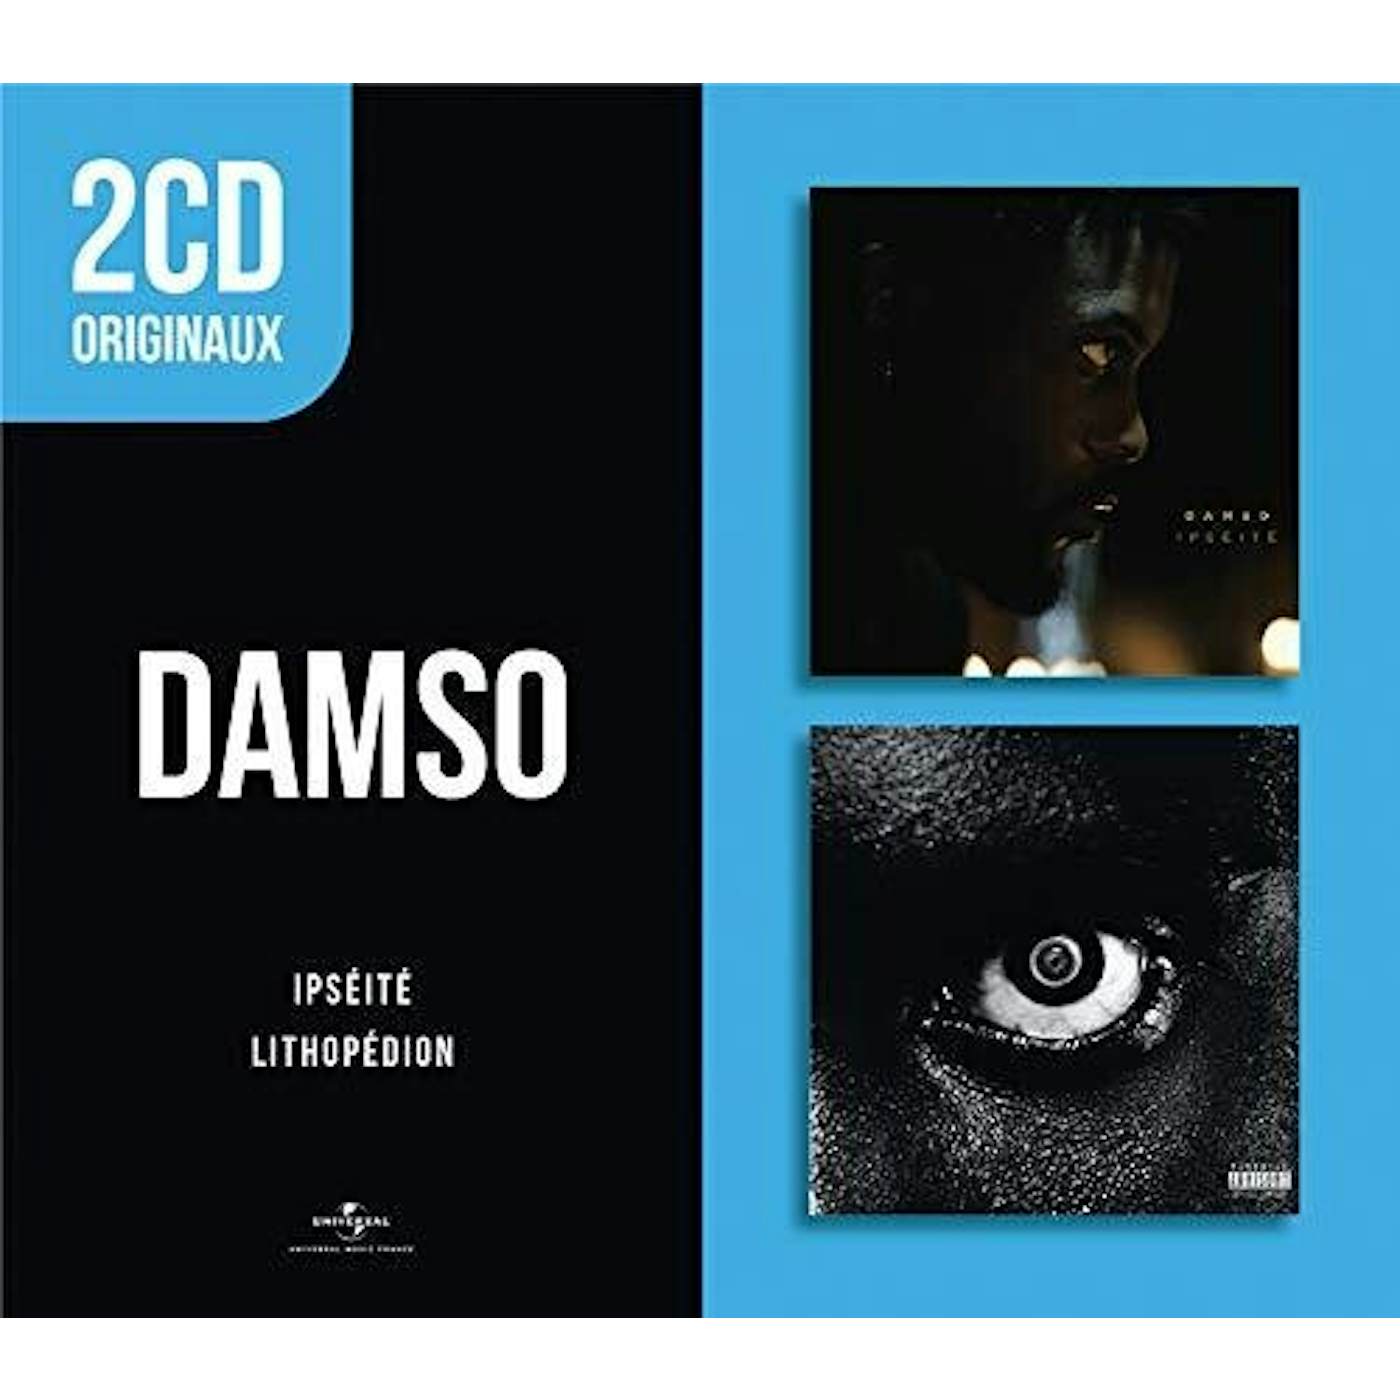 Damso Shirts,Damso Merch,Damso Hoodies,Damso Vinyl Records,Damso Posters, Damso Hats,Damso CDs,Damso Music,Damso Merch Store